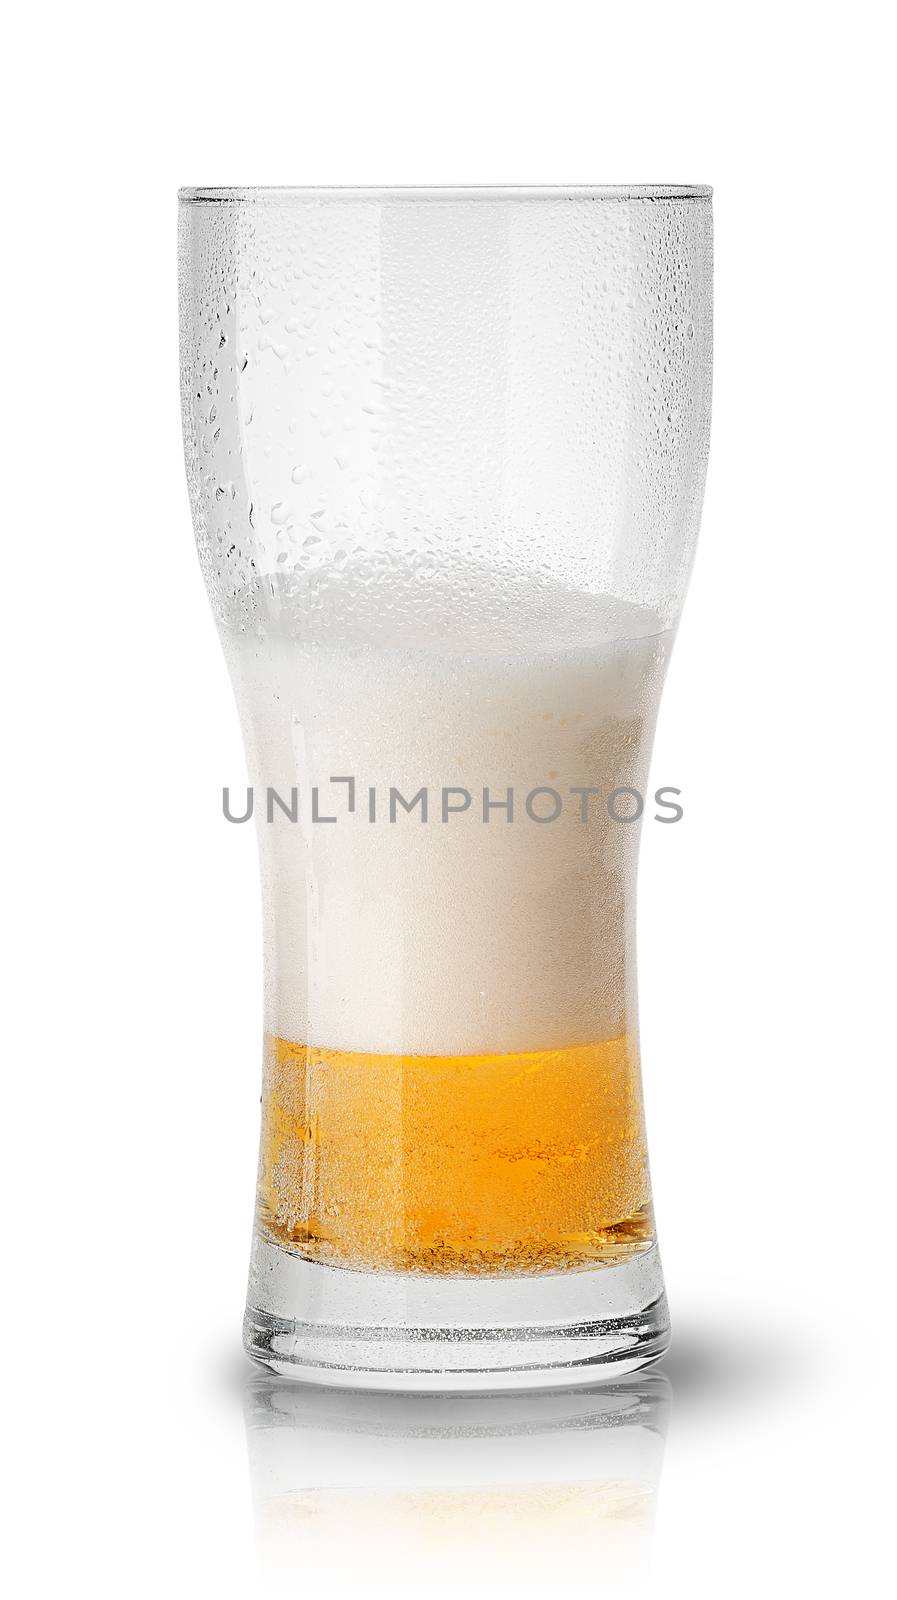 Few beer in sweaty glass by Cipariss